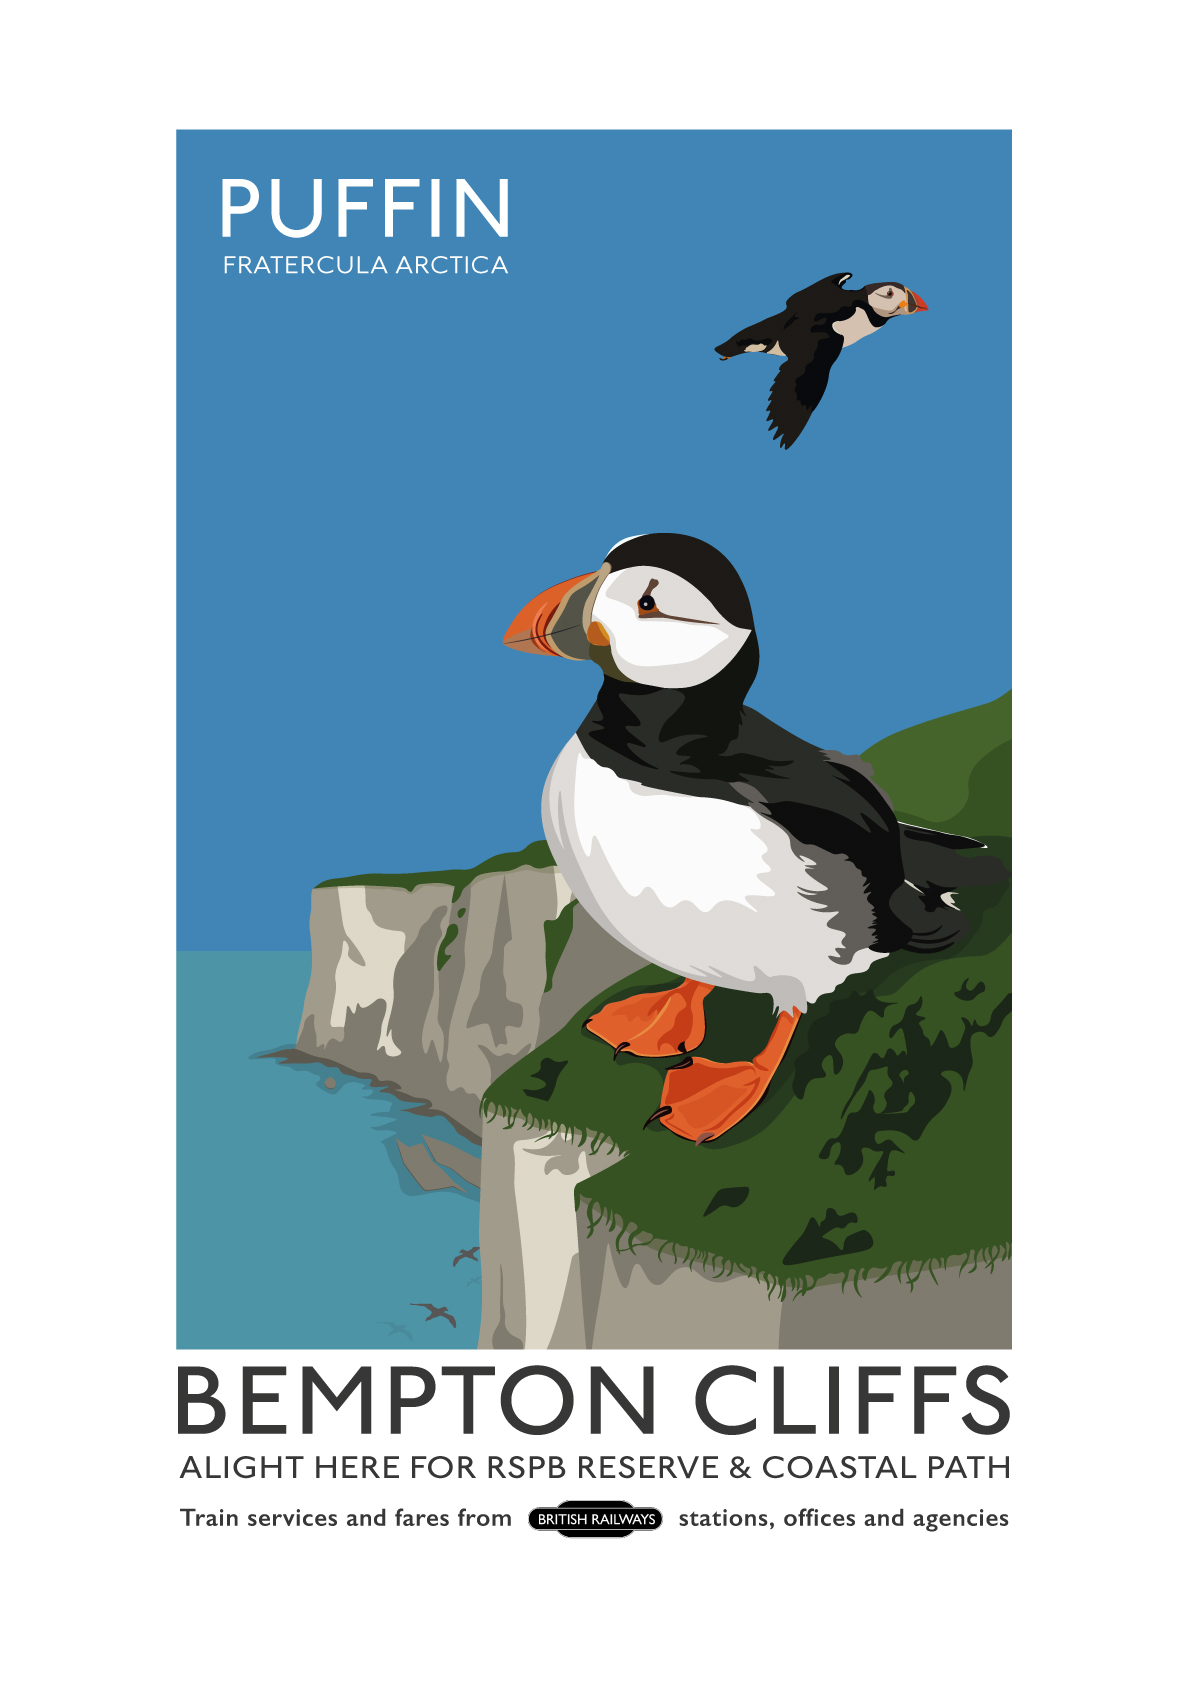 RSPB Bempton Cliffs Puffin Poster